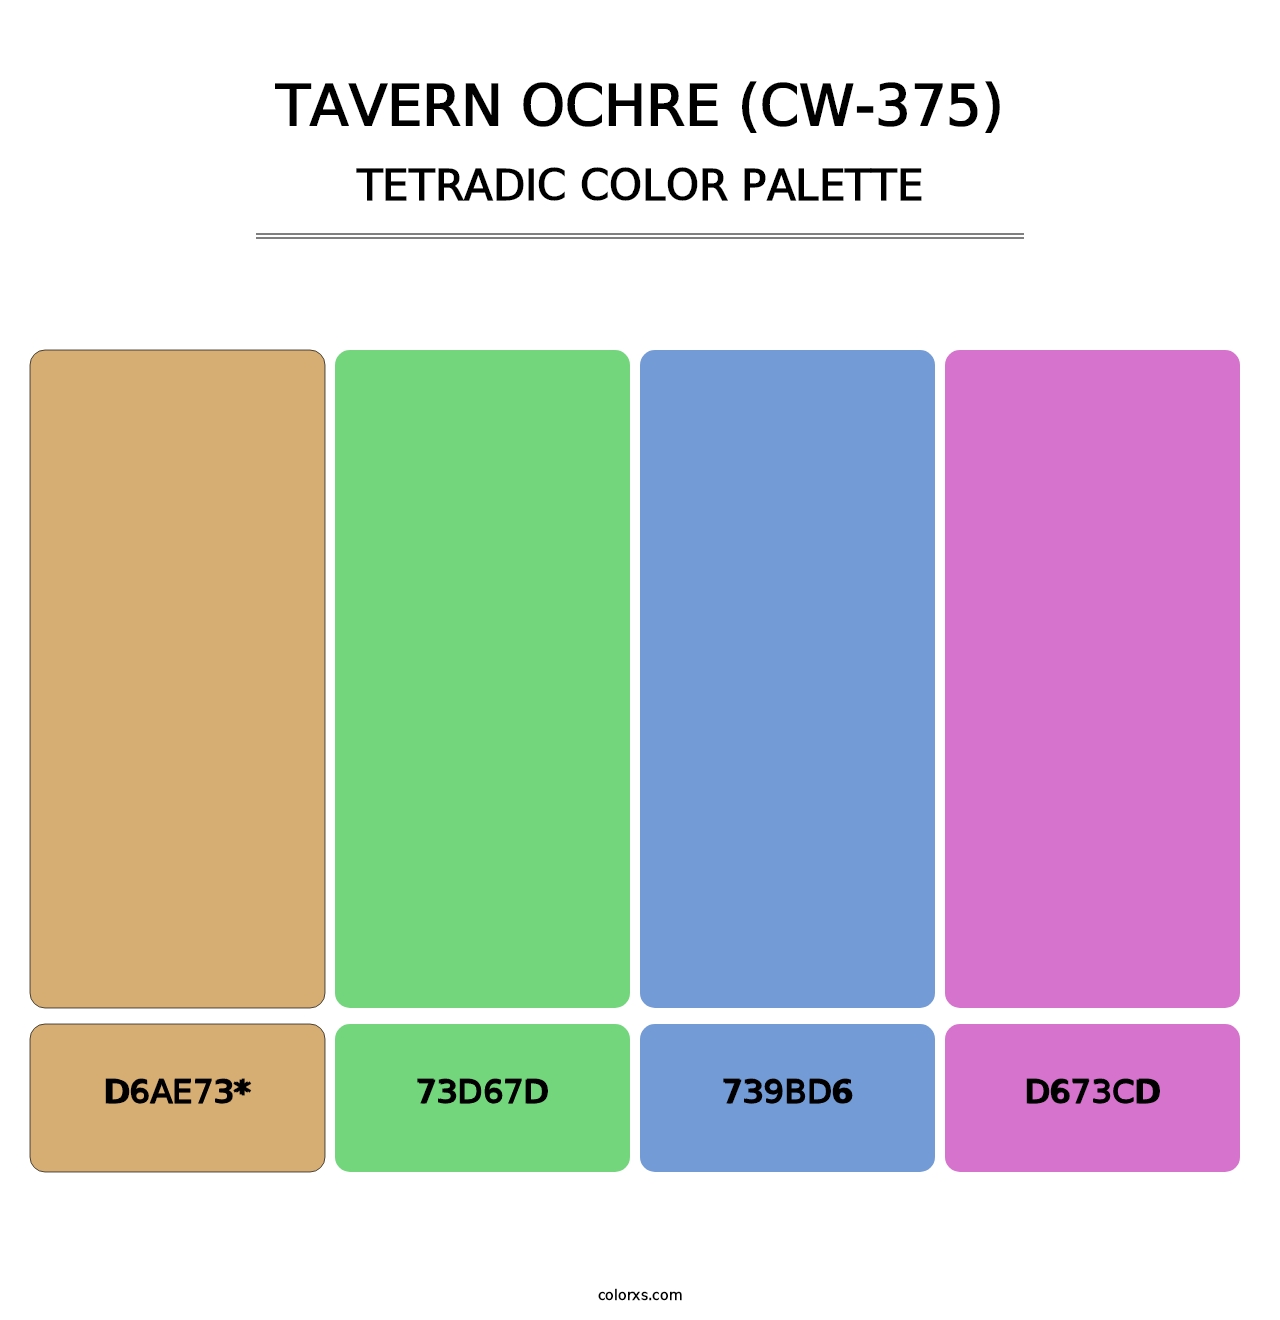 Tavern Ochre (CW-375) - Tetradic Color Palette